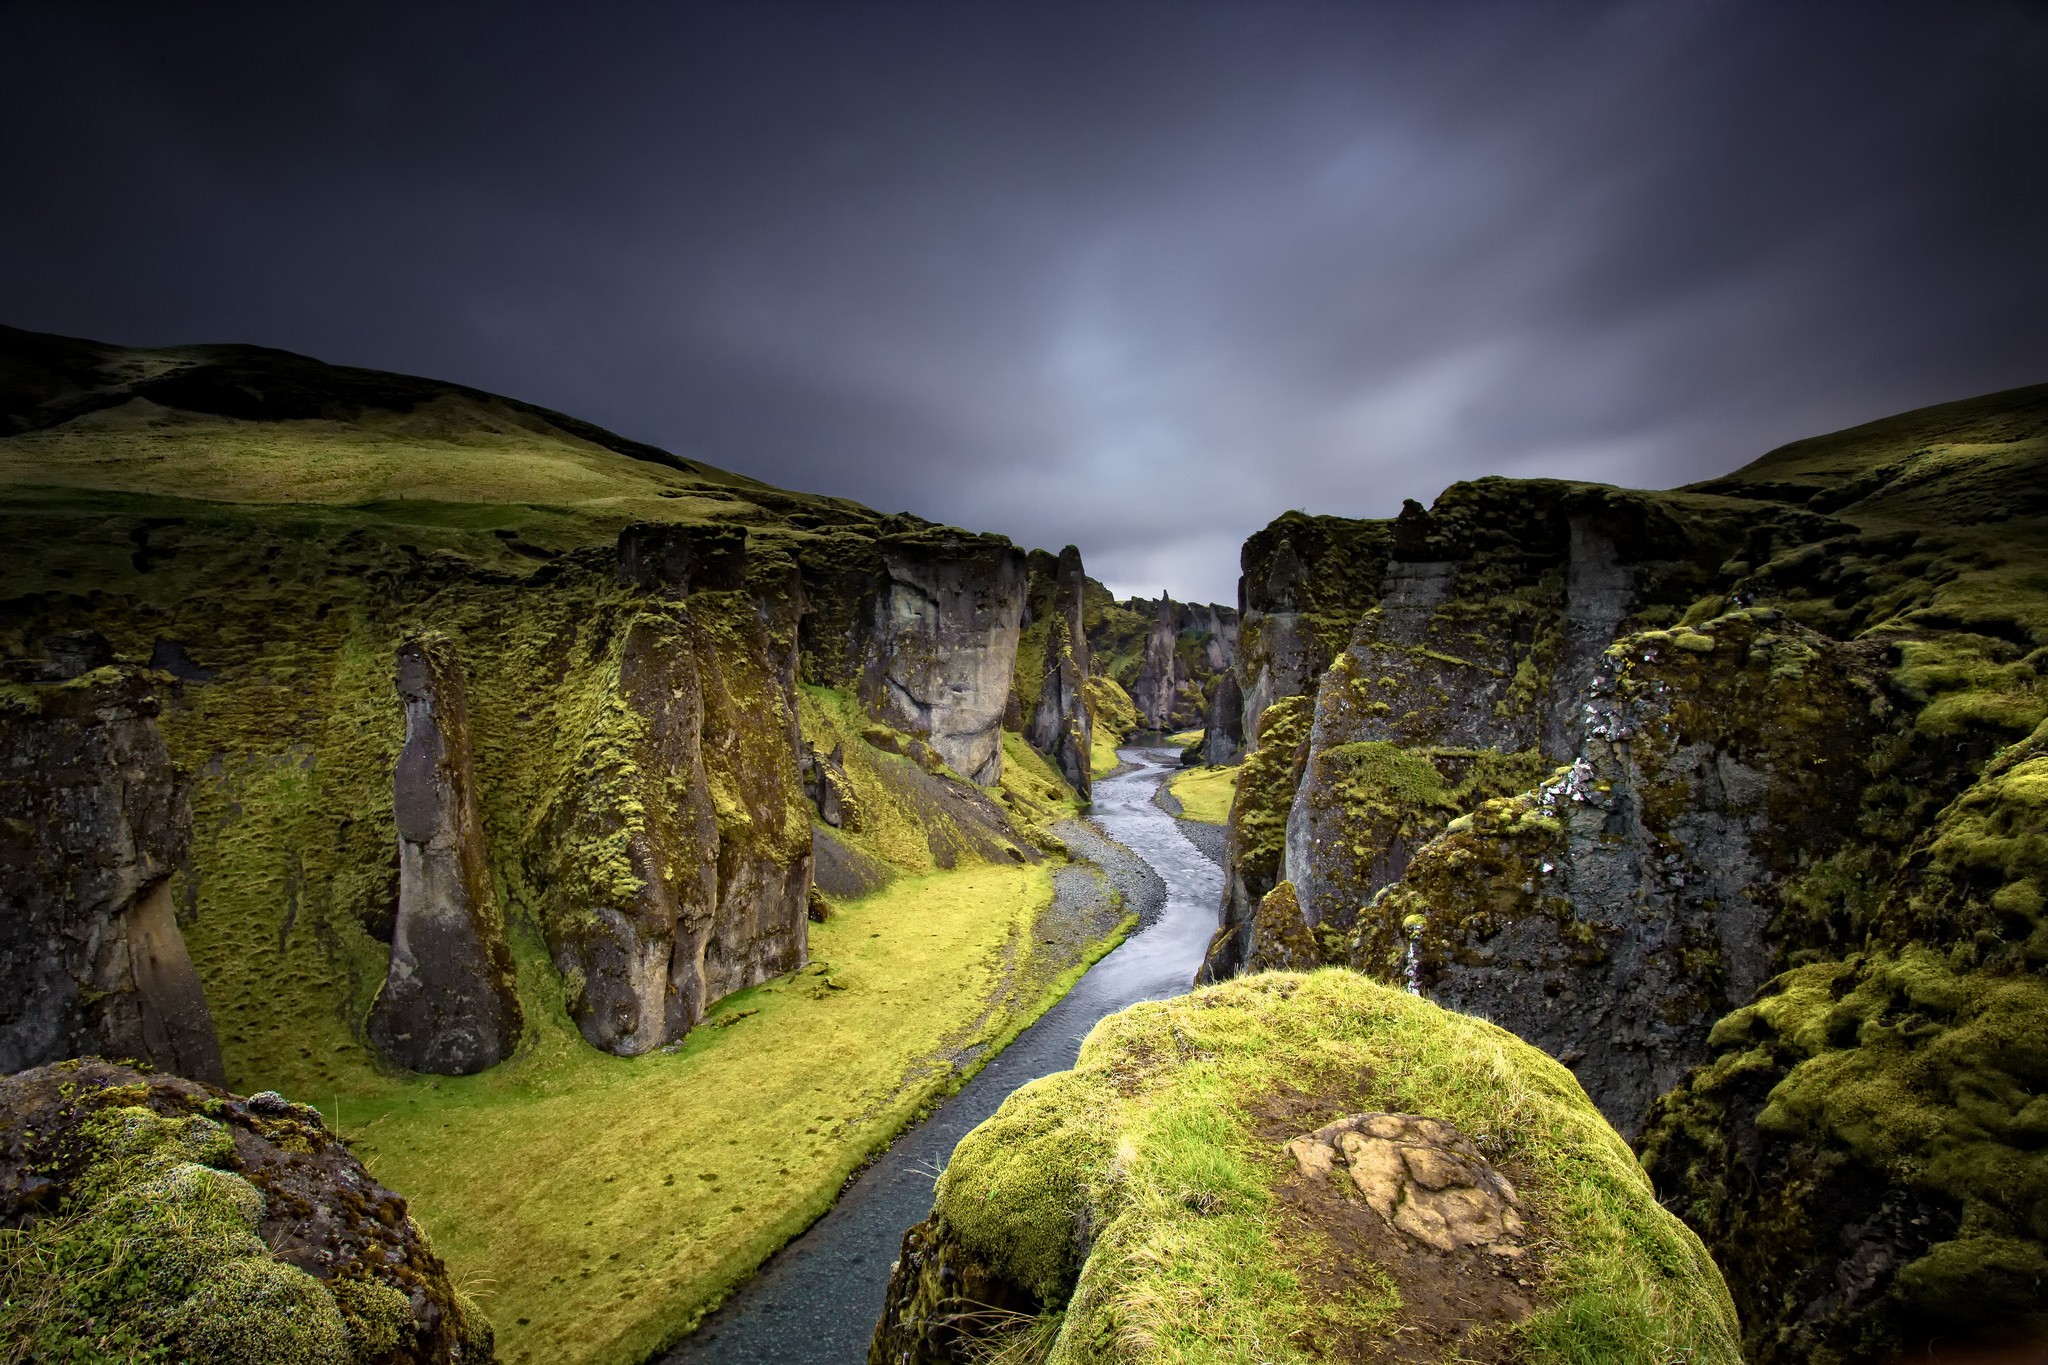 General 2048x1365 landscape river moss canyon rocks overcast Iceland nature Fjadrargljufur